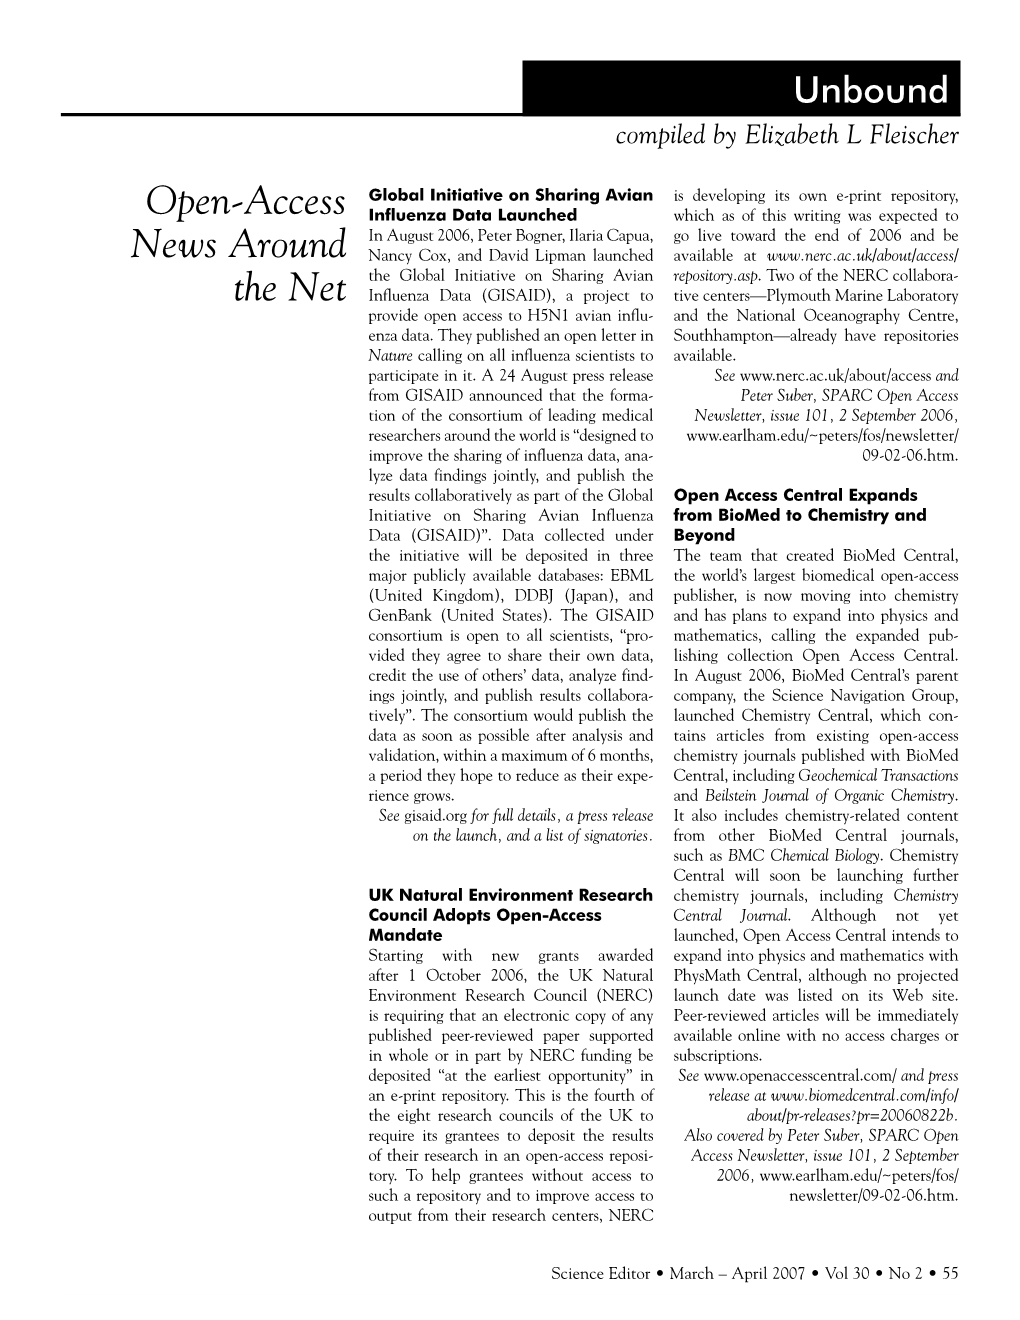 Open-Access News Around The